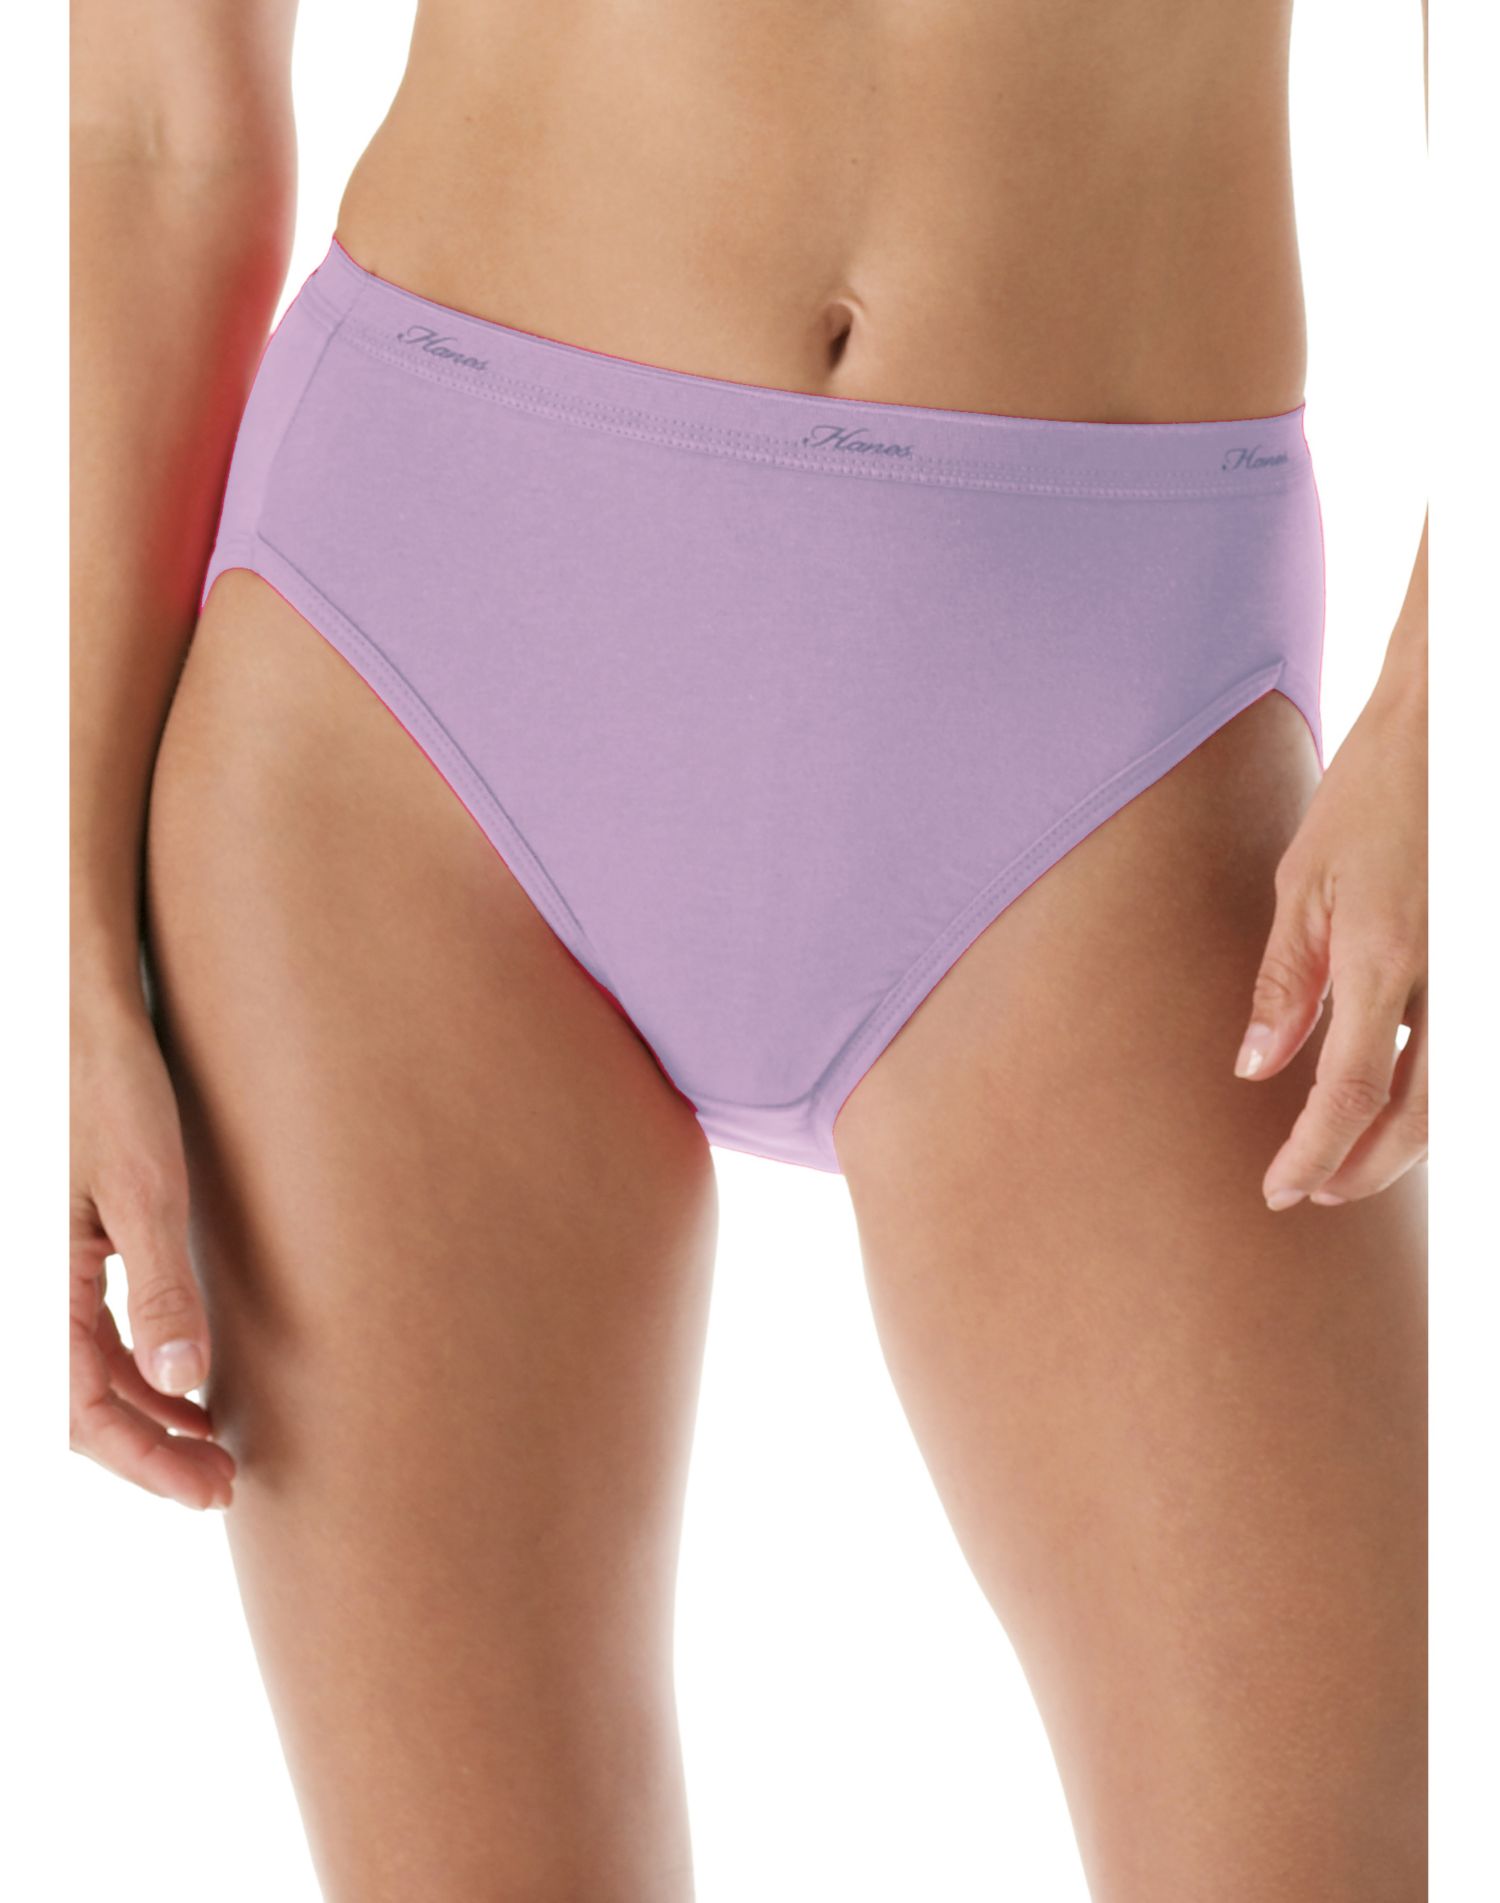 Hanes® Cool Comfort? Women's Cotton Hi-Cut Panties Size 7, 6 Pack